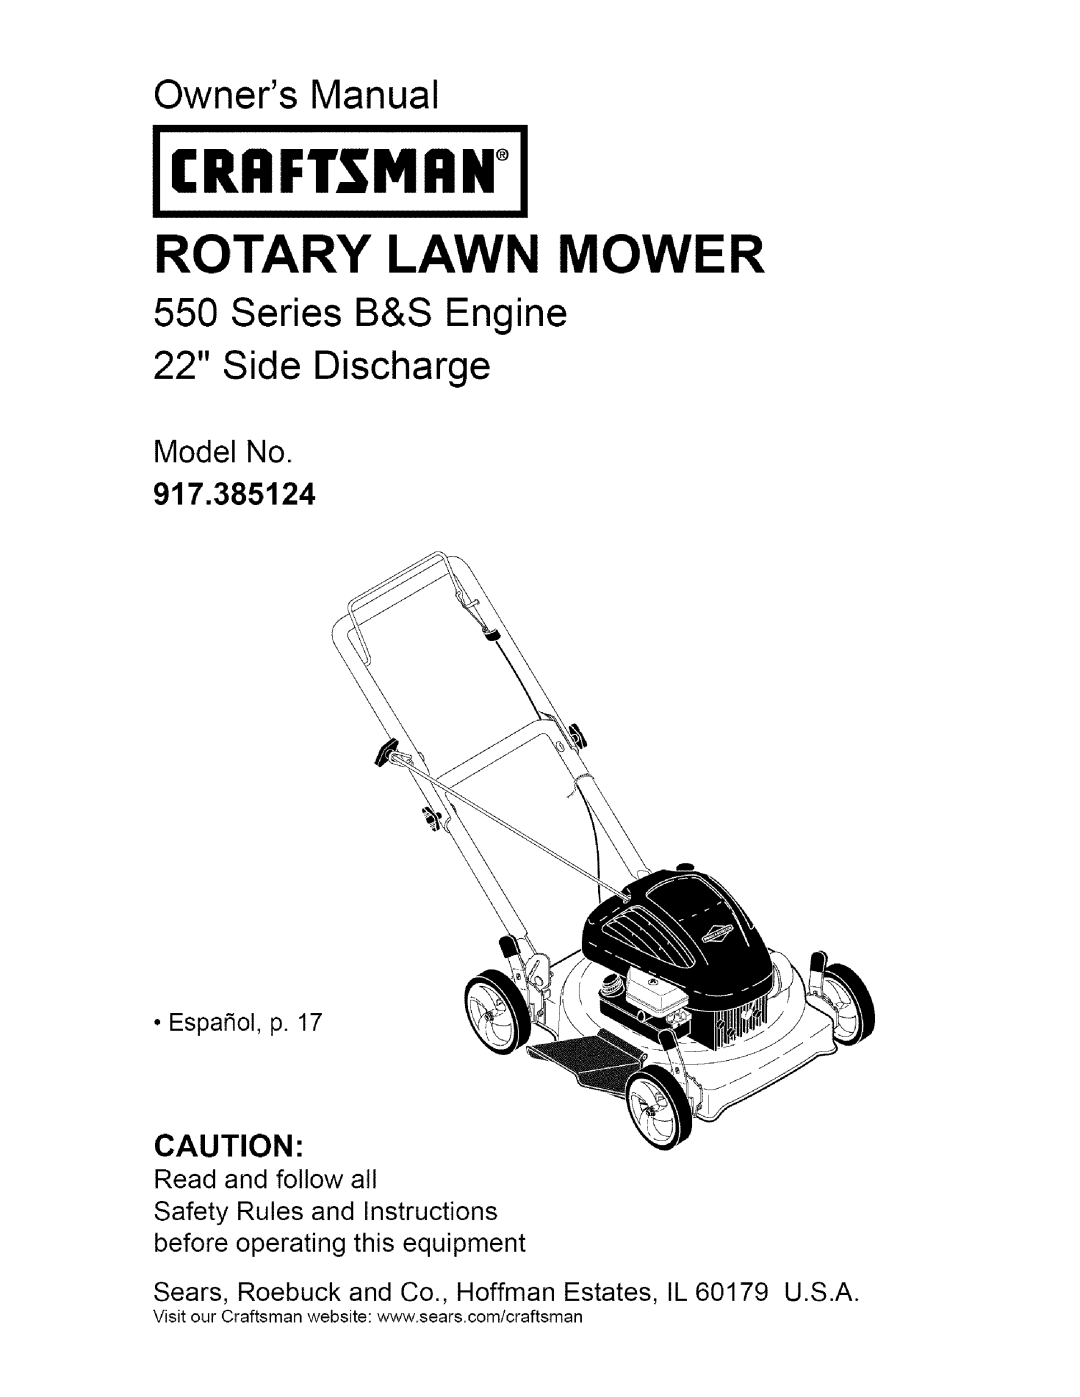 Craftsman 917.385124 owner manual Series B&S Engine 22 Side Discharge, Crrftsmrn, Rotary Lawn Mower, Model No 